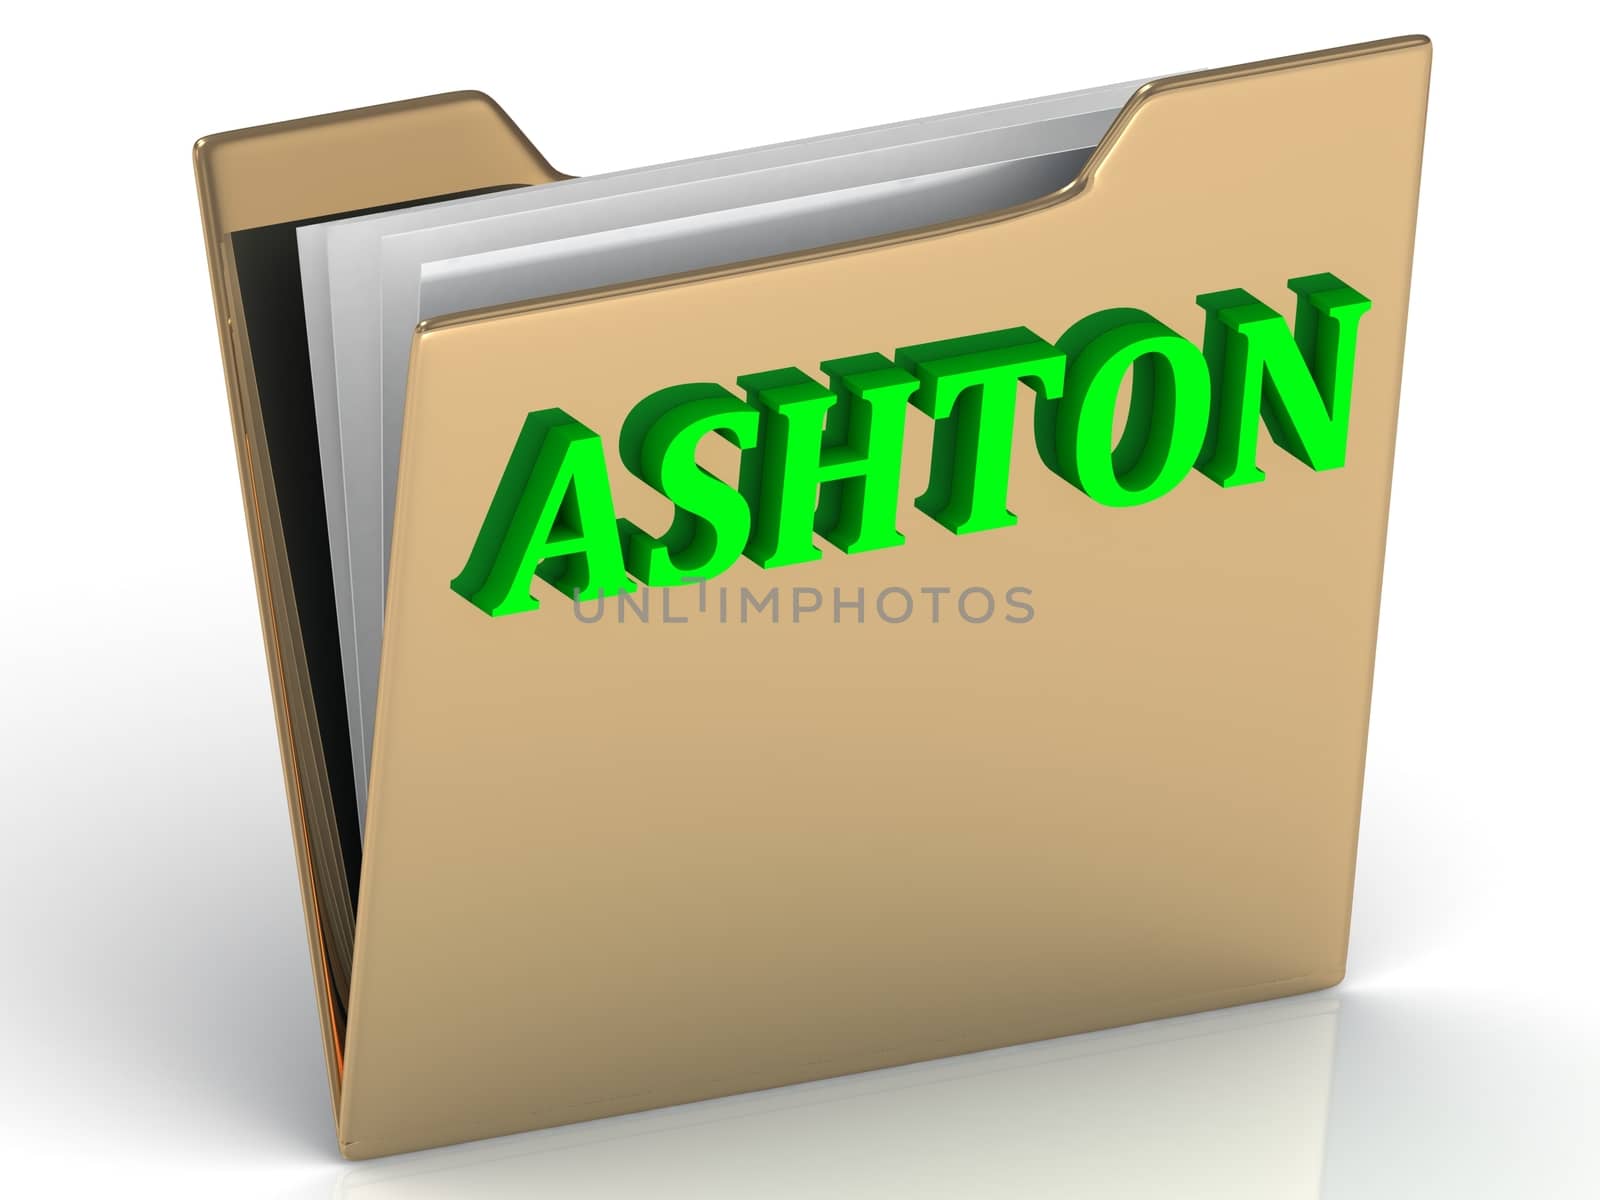 ASHTON- bright green letters on gold paperwork folder on a white background